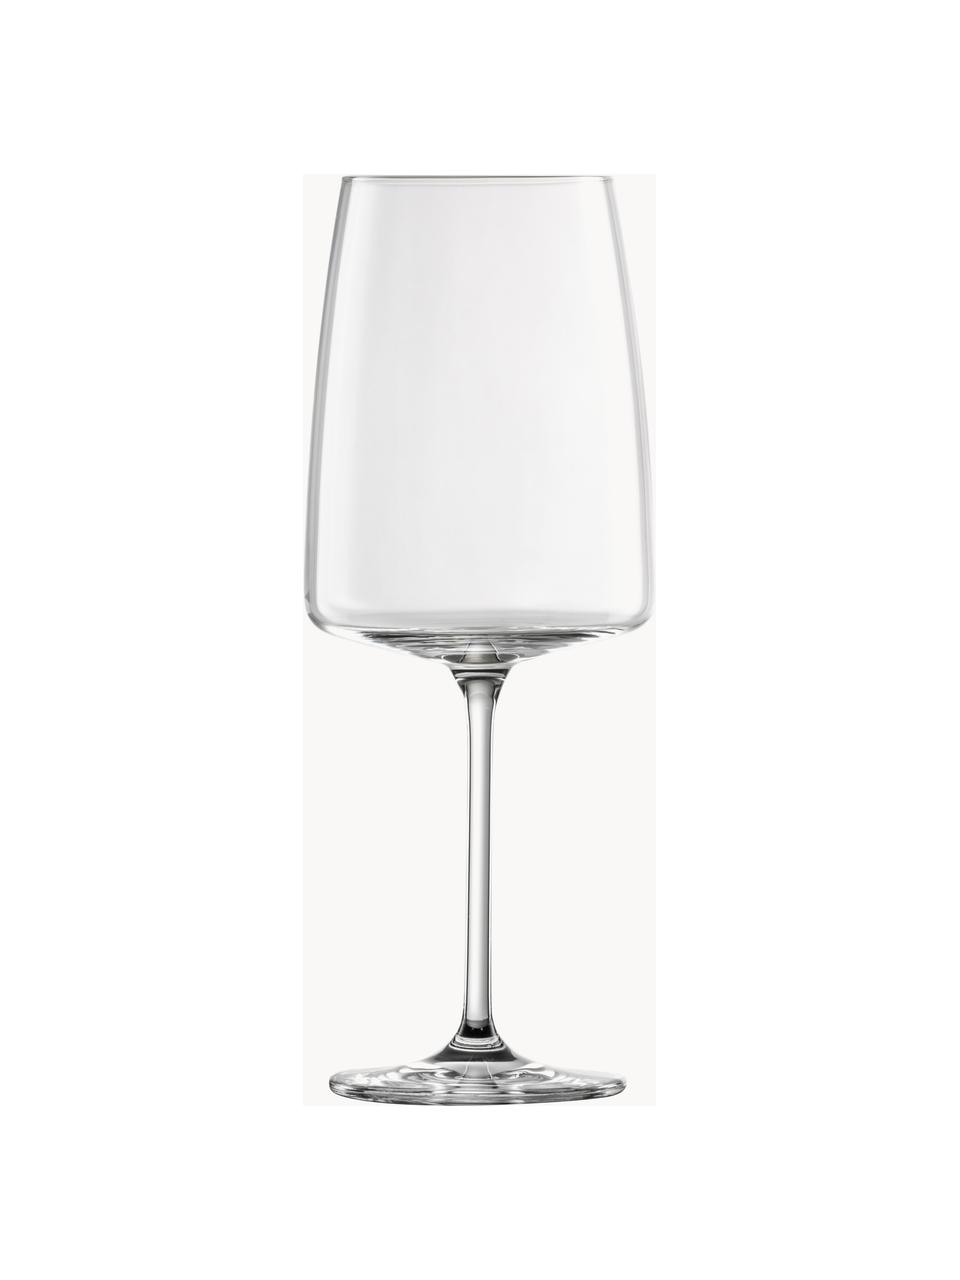 Kristall-Weingläser kraftvoll & würzig Vivid Senses, 2 Stück, Tritan-Kristallglas, Transparent, Ø 9 x H 24 cm, 660 ml